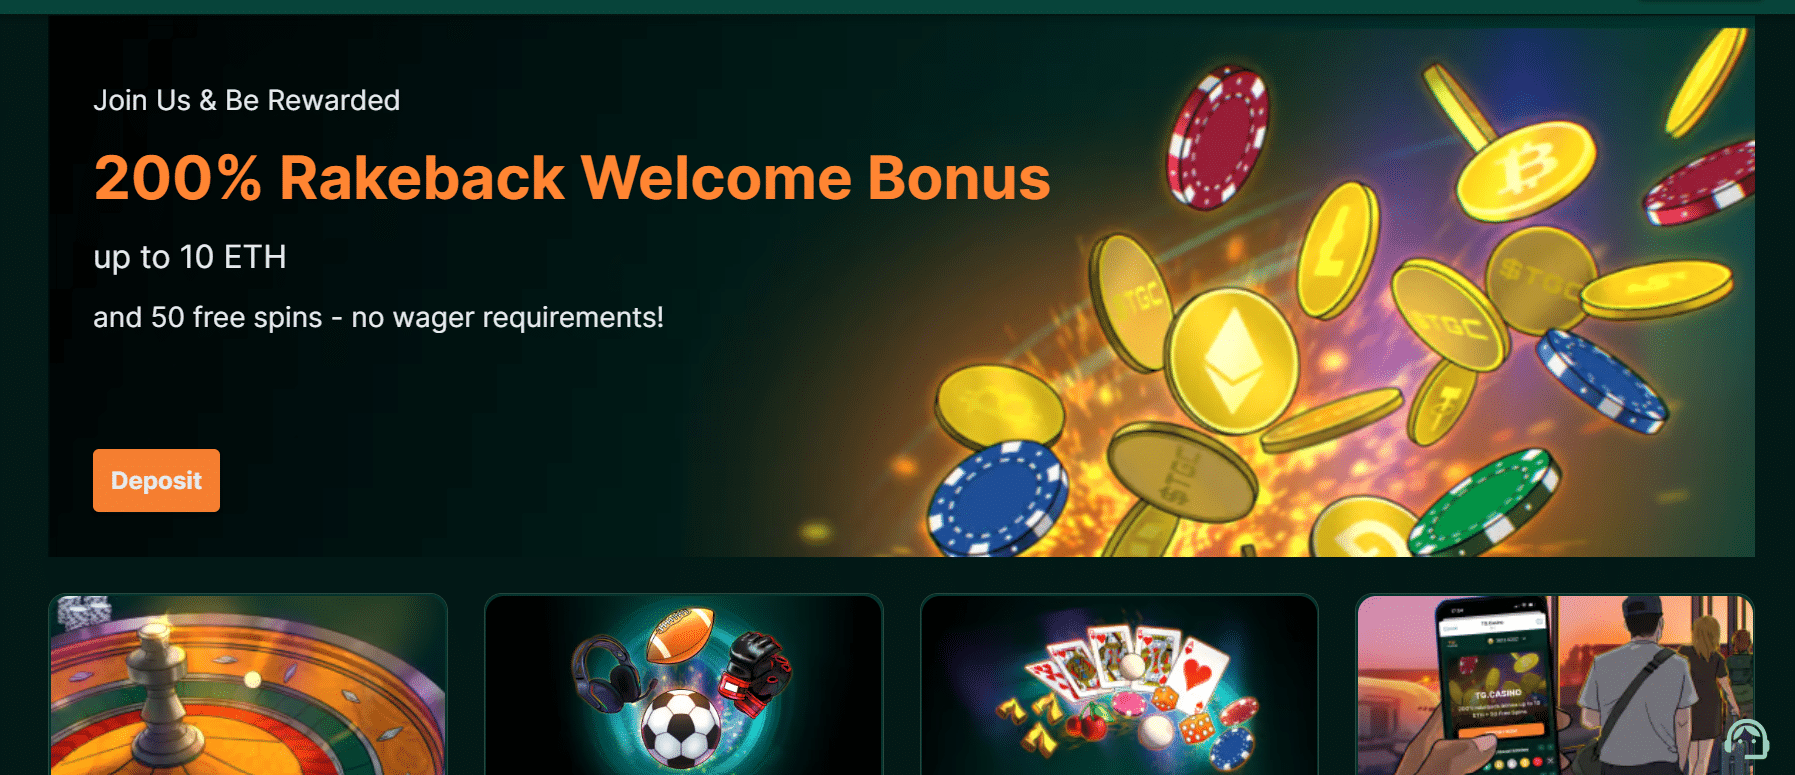 TG.Casino welcome bonus